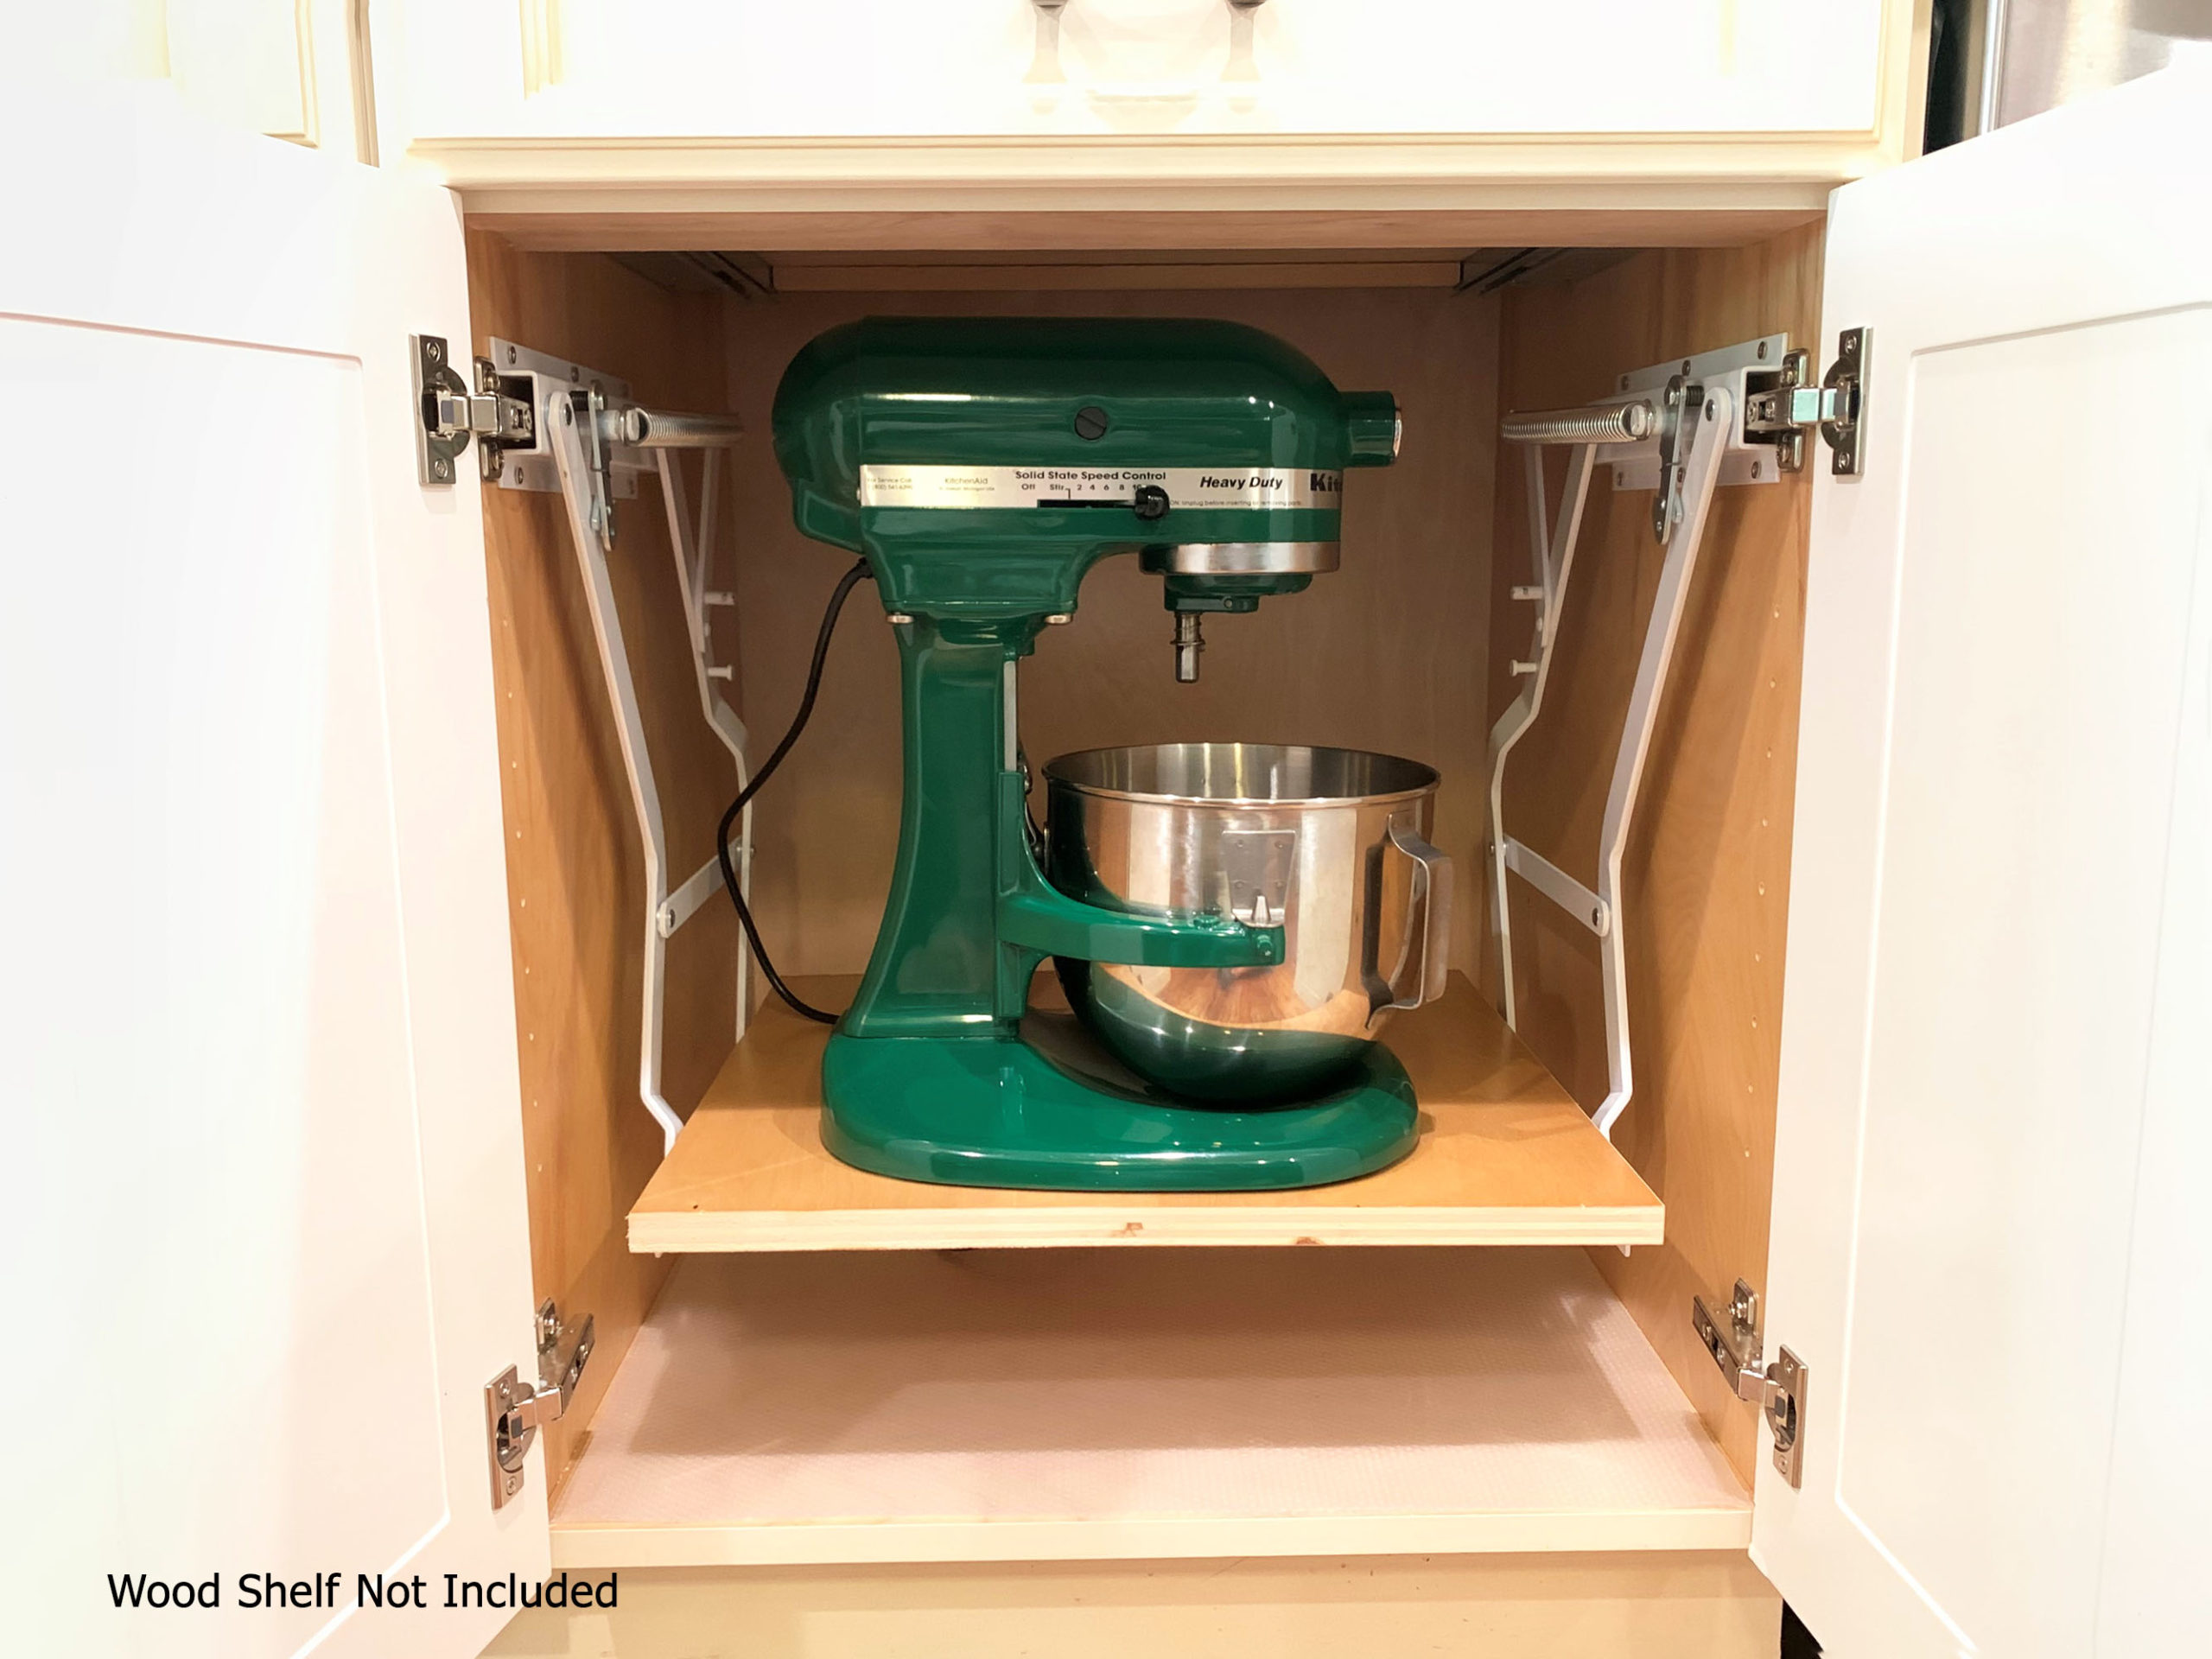 https://woodtechnology.com/wp-content/uploads/2016/06/3275.001.061-kitchen-appliance-lift-1b-scaled.jpg